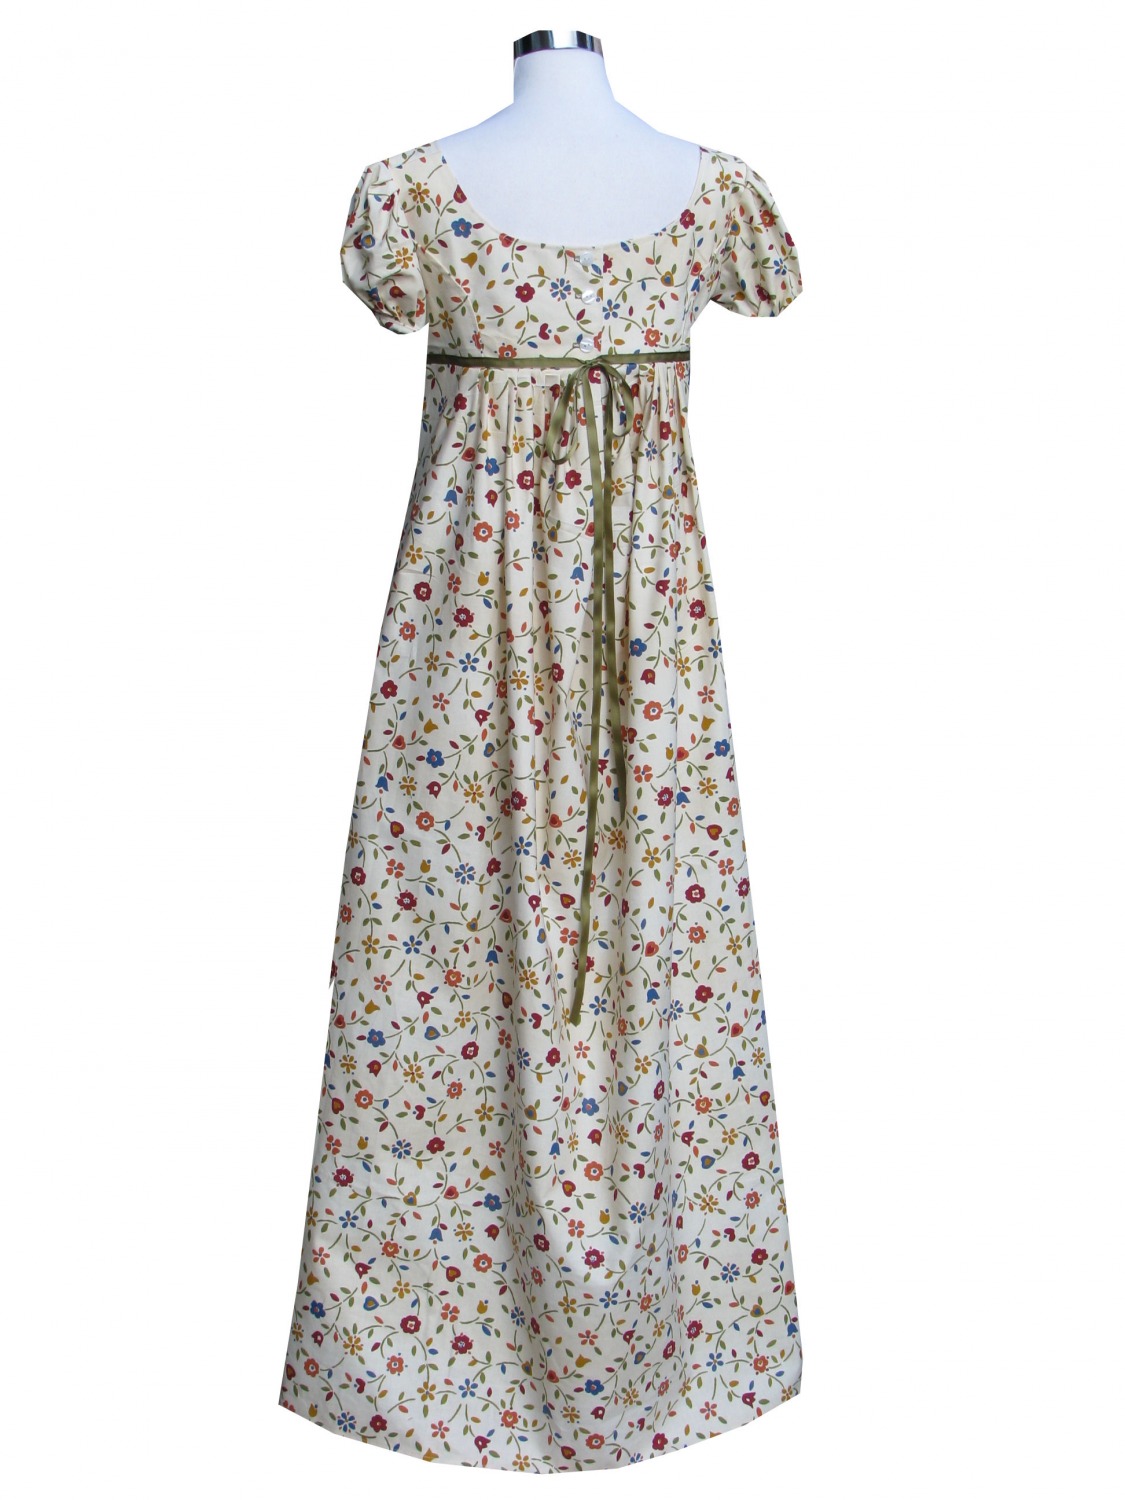 Ladies 19th Century Regency Jane Austen Costume Size 10 - 12  Image